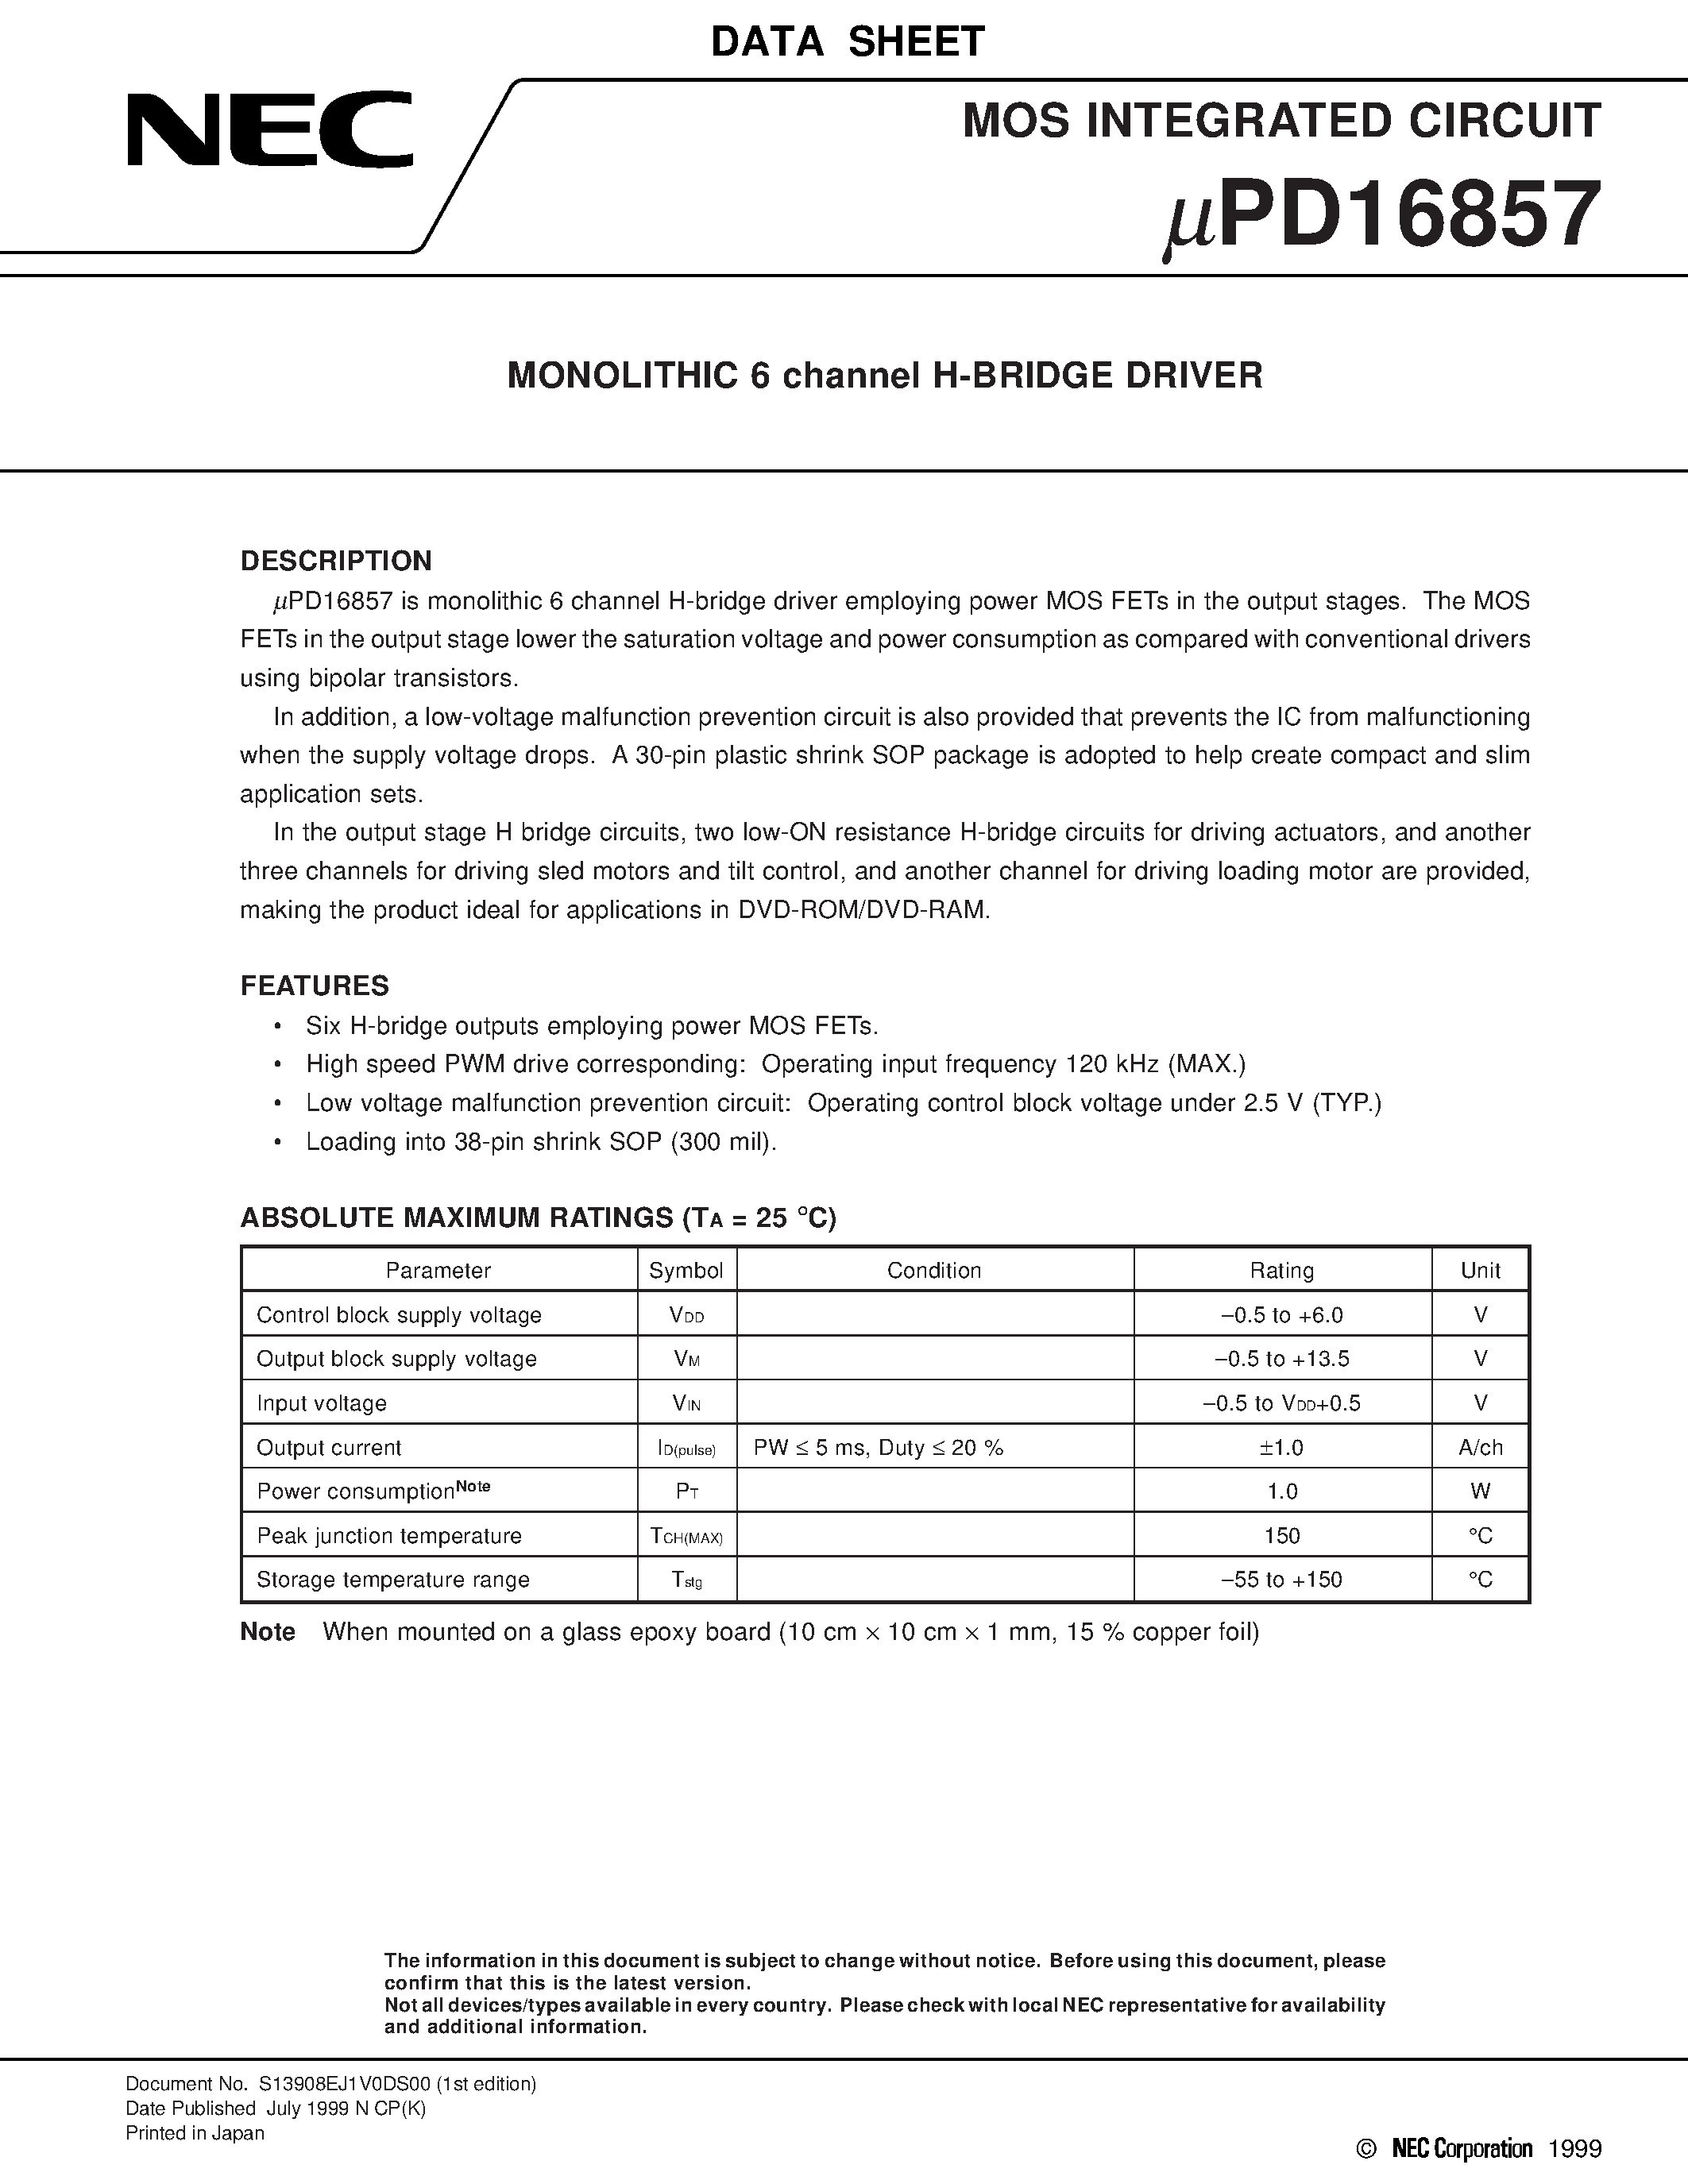 Datasheet UPD16857 - MONOLITHIC 6 channel H-BRIDGE DRIVER page 1